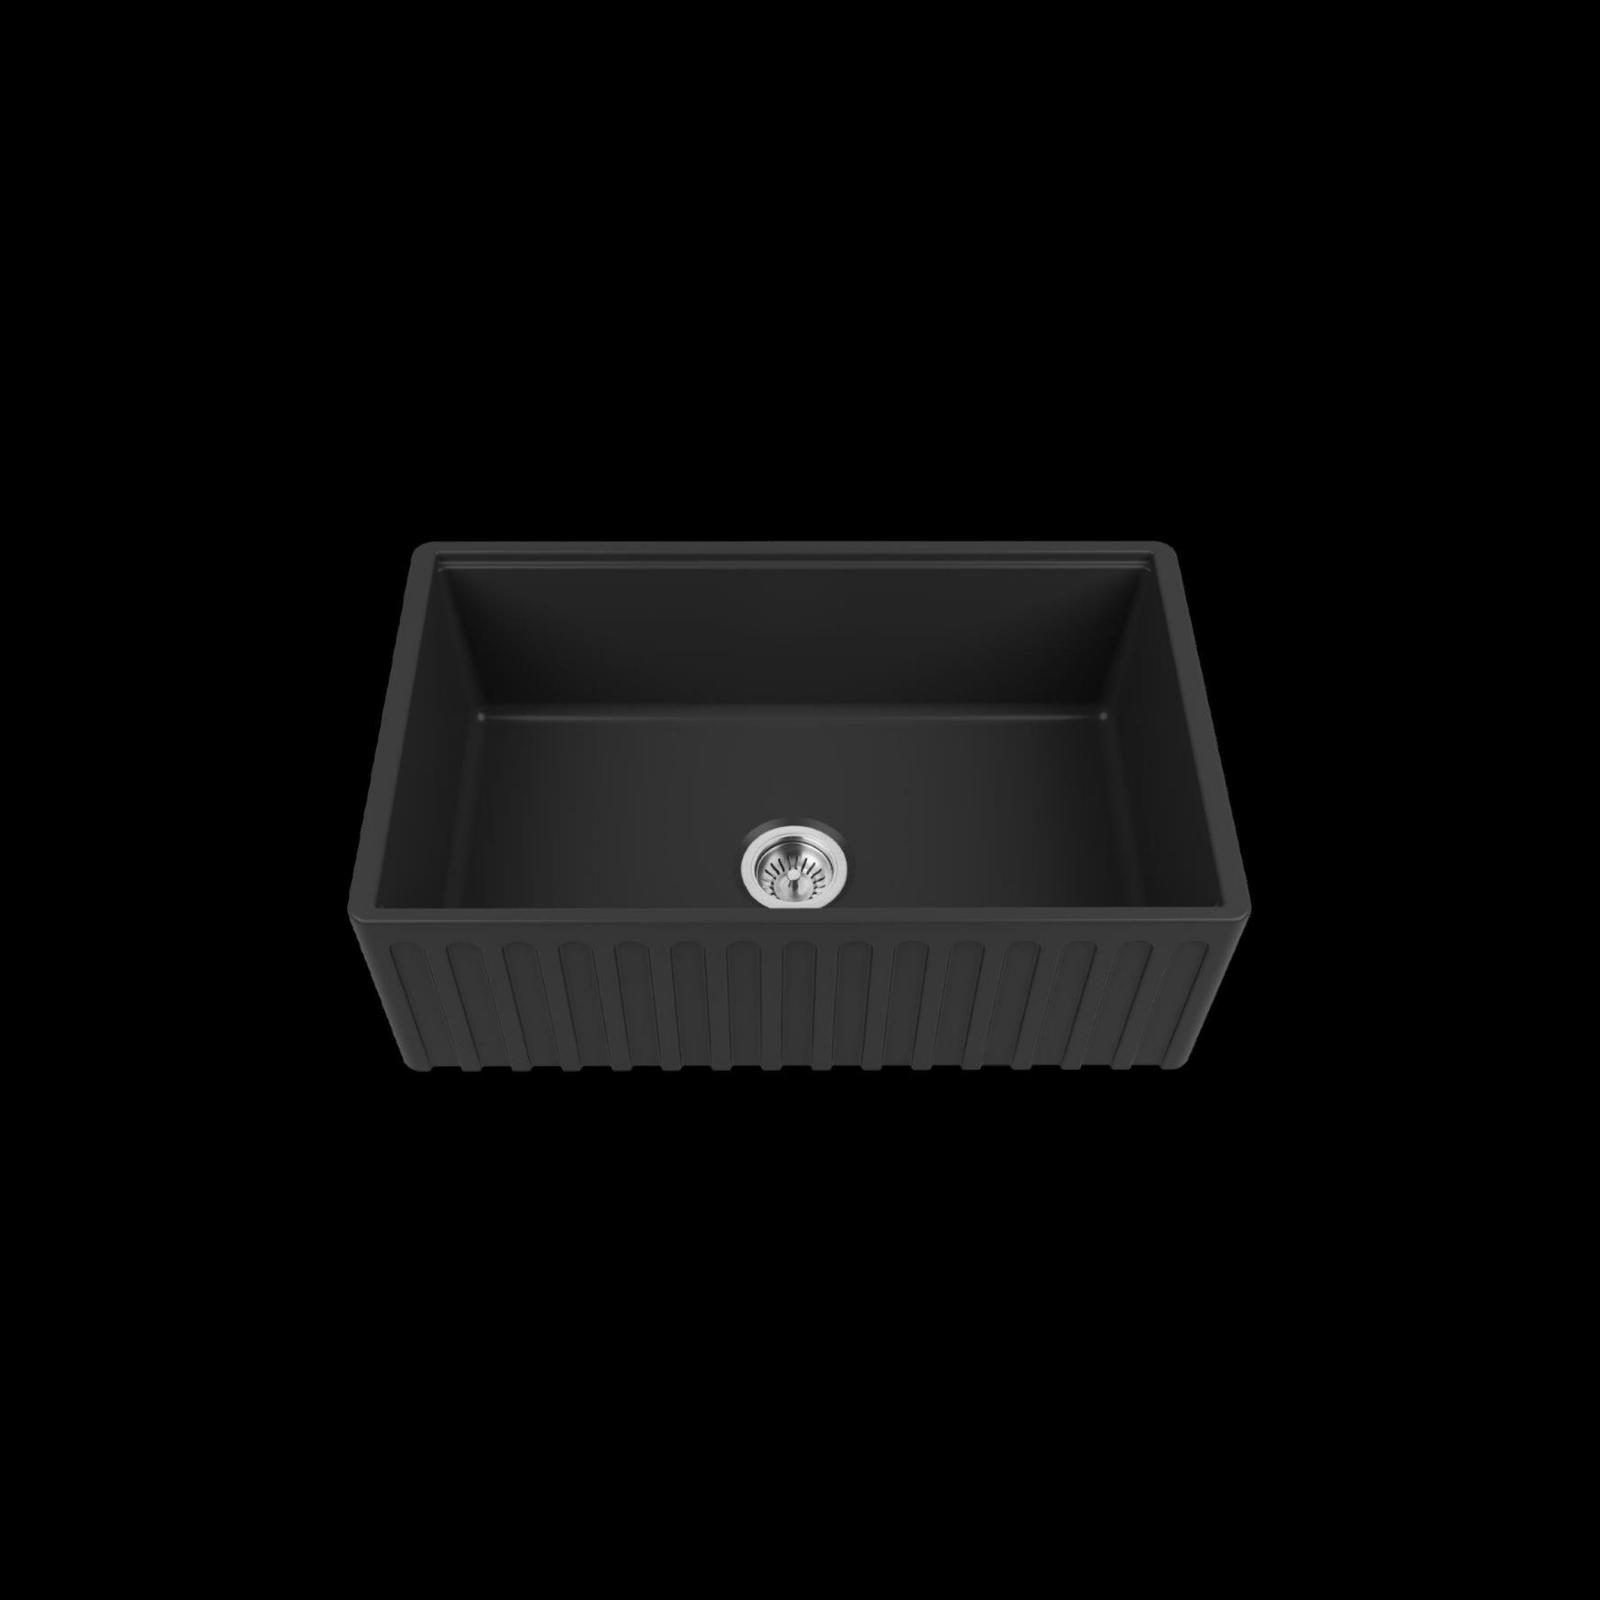 High-quality sink Louis Le Grand I black - single bowl, ceramic